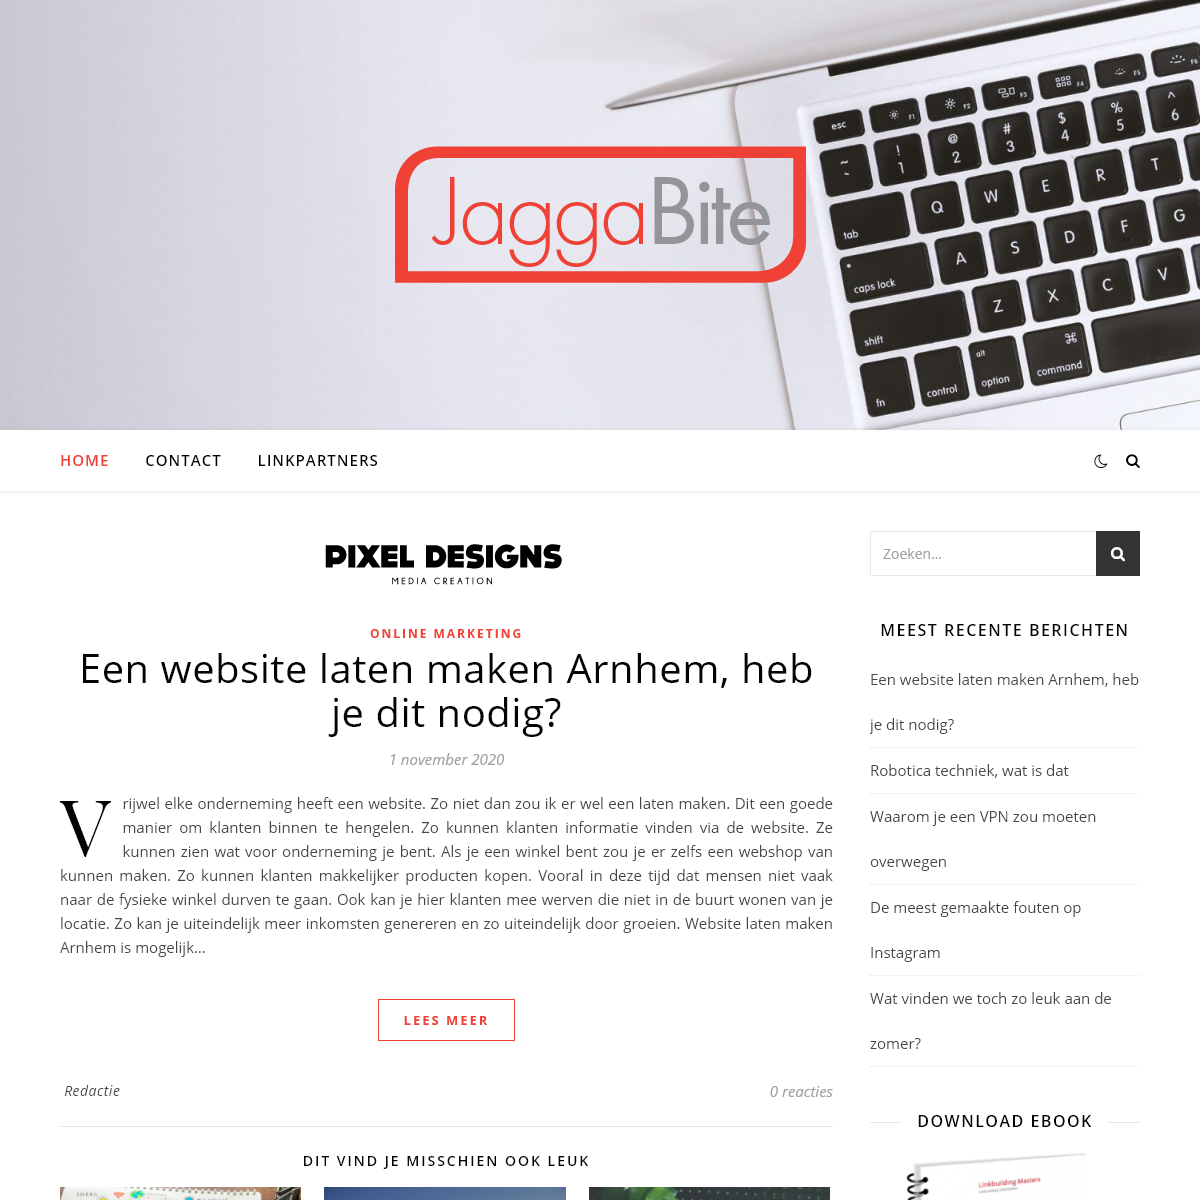 A complete backup of jaggabite.nl